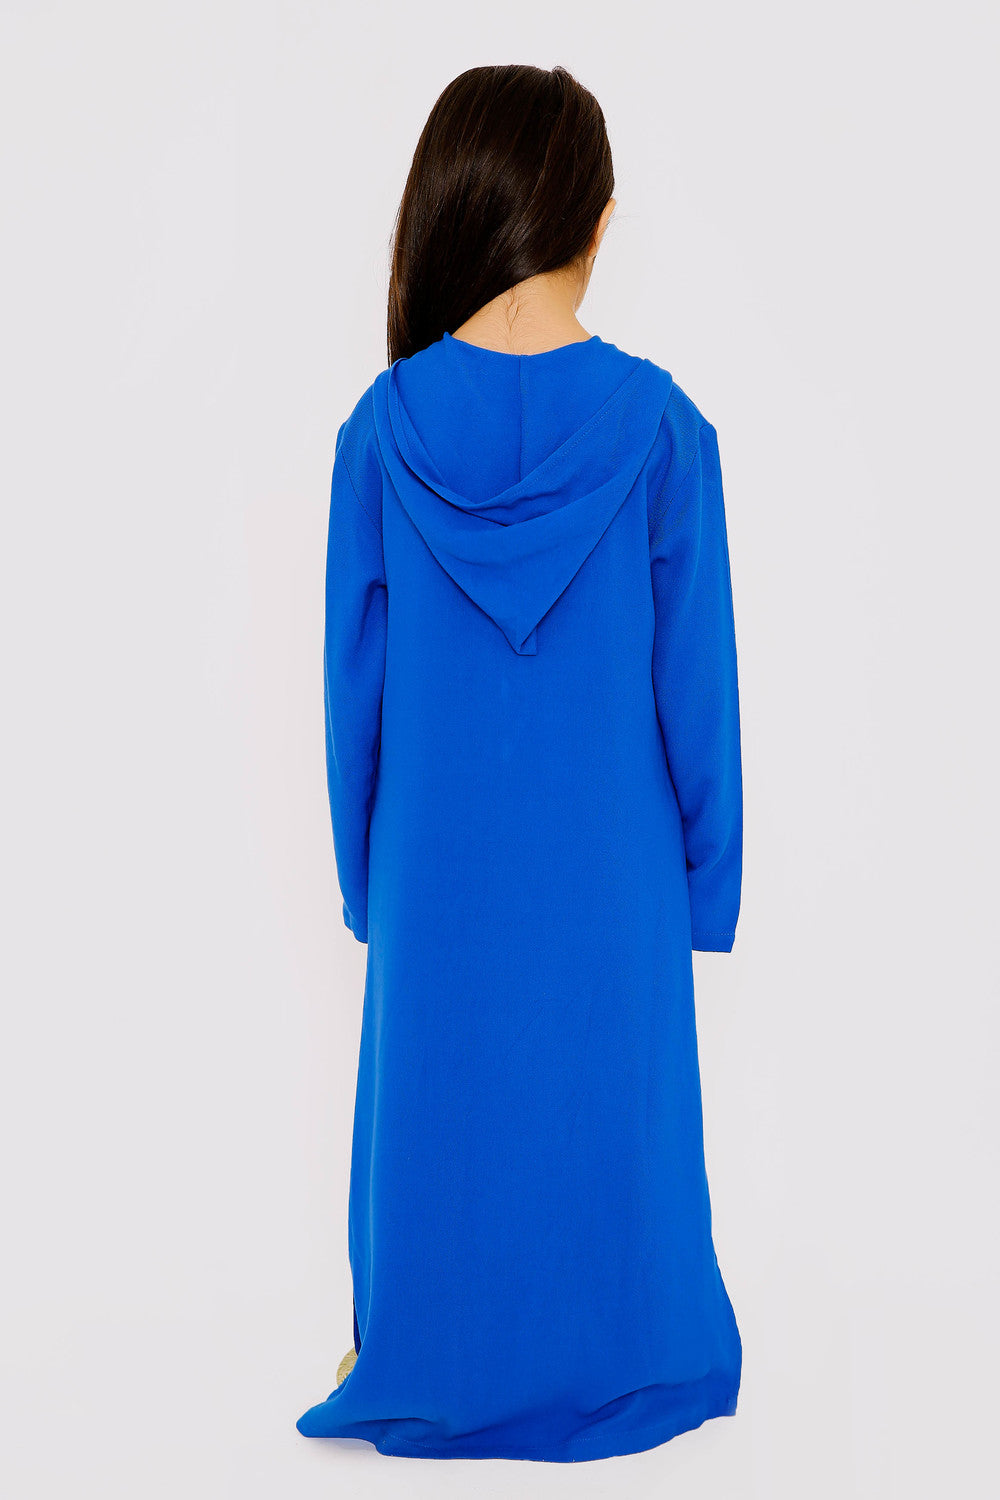 Djellaba Cherifa Girl's Long Sleeve Hooded Maxi Dress Kaftan in Royal Blue